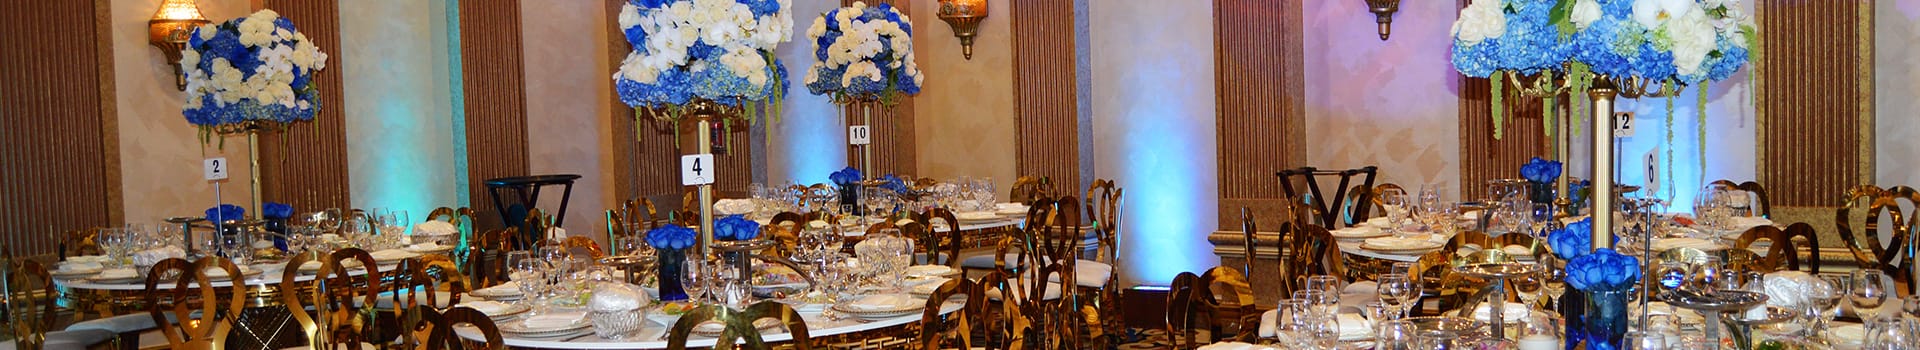 Renaissance Banquet Hall - Dining